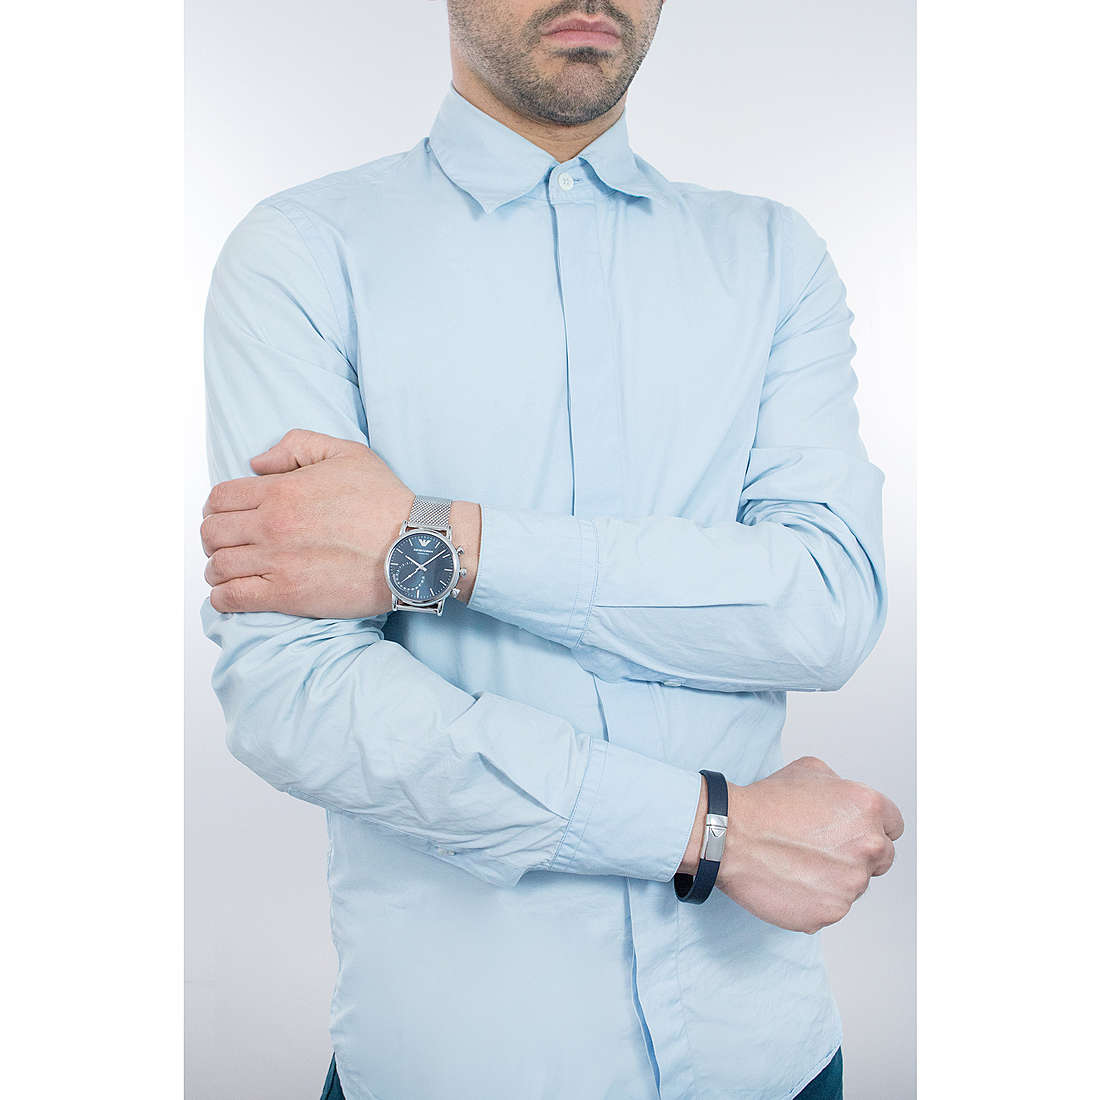 Emporio Armani Smartwatches uomo ART9003 indosso